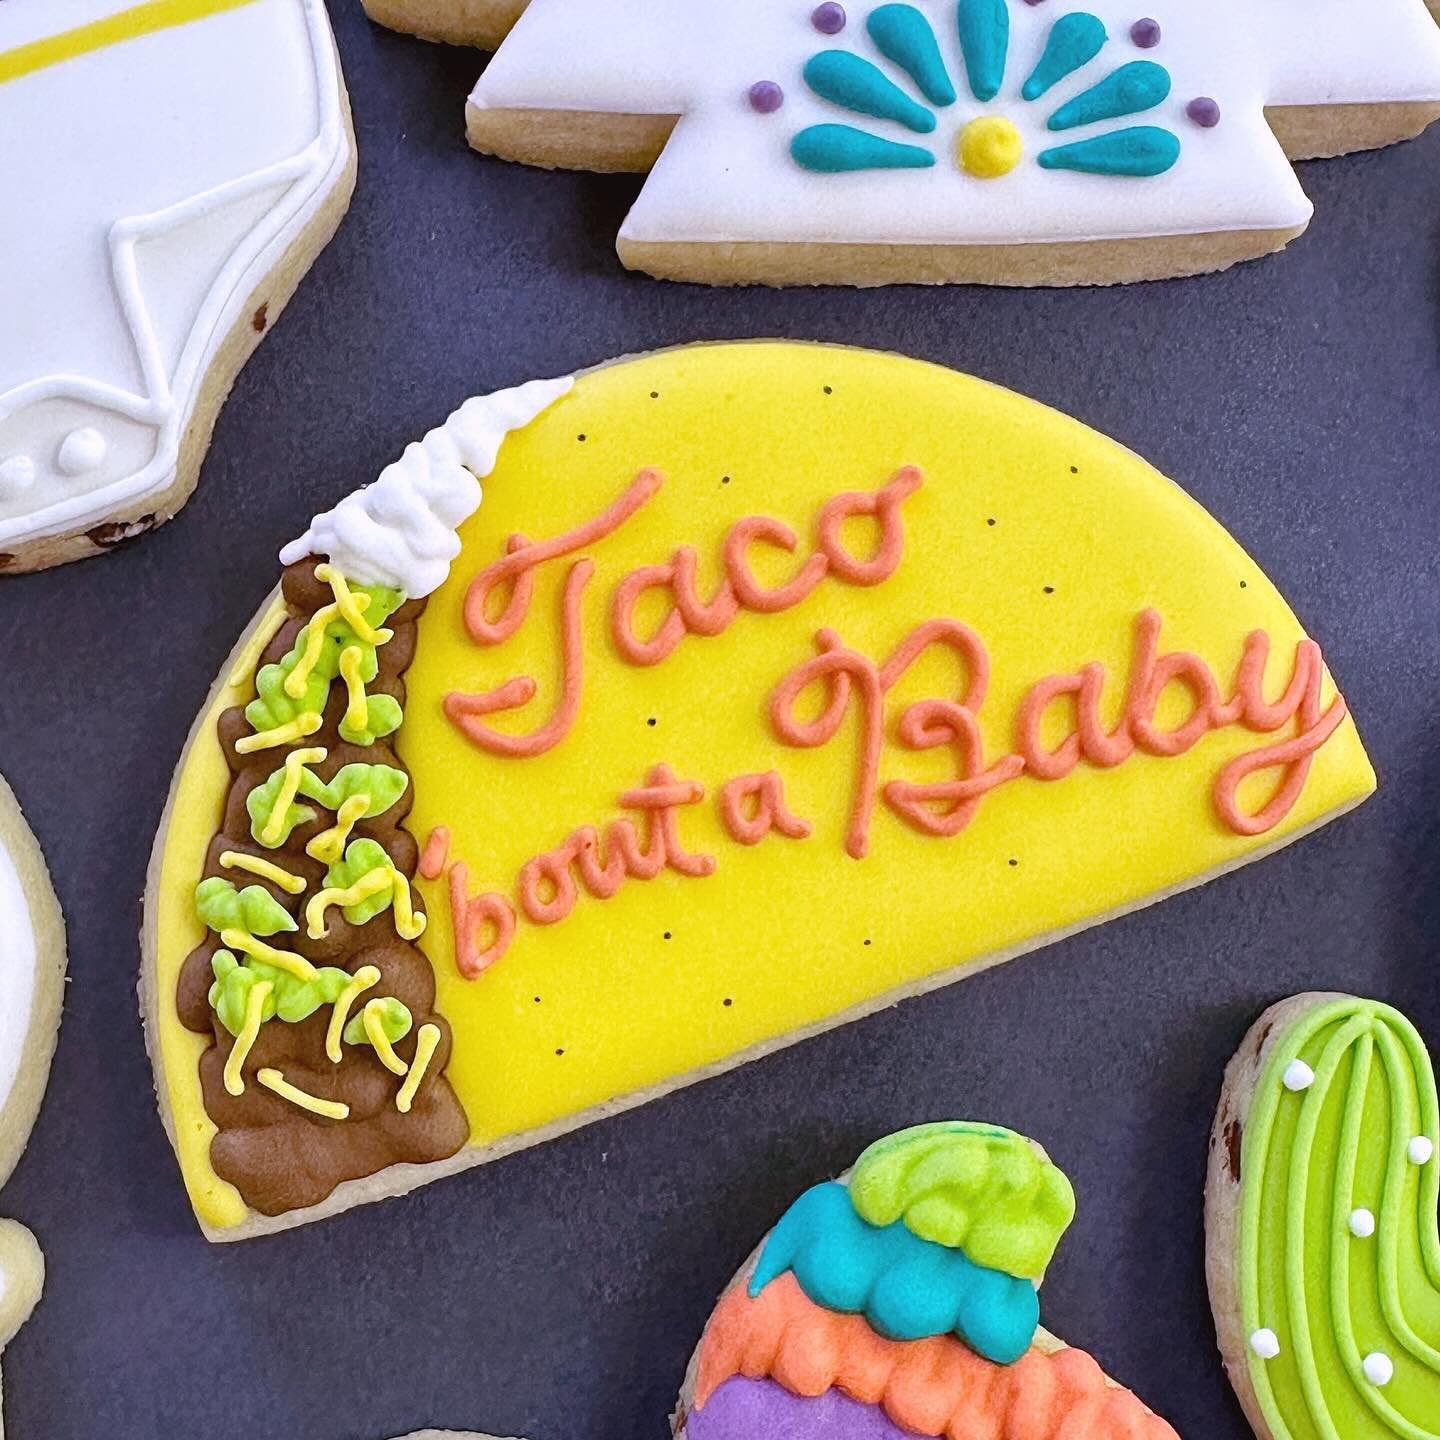 The taco closeups 🌮🌮

#tacoboutababy #babyshowercookies #customcookiesatlanta #atlcookies #customsugarcookies